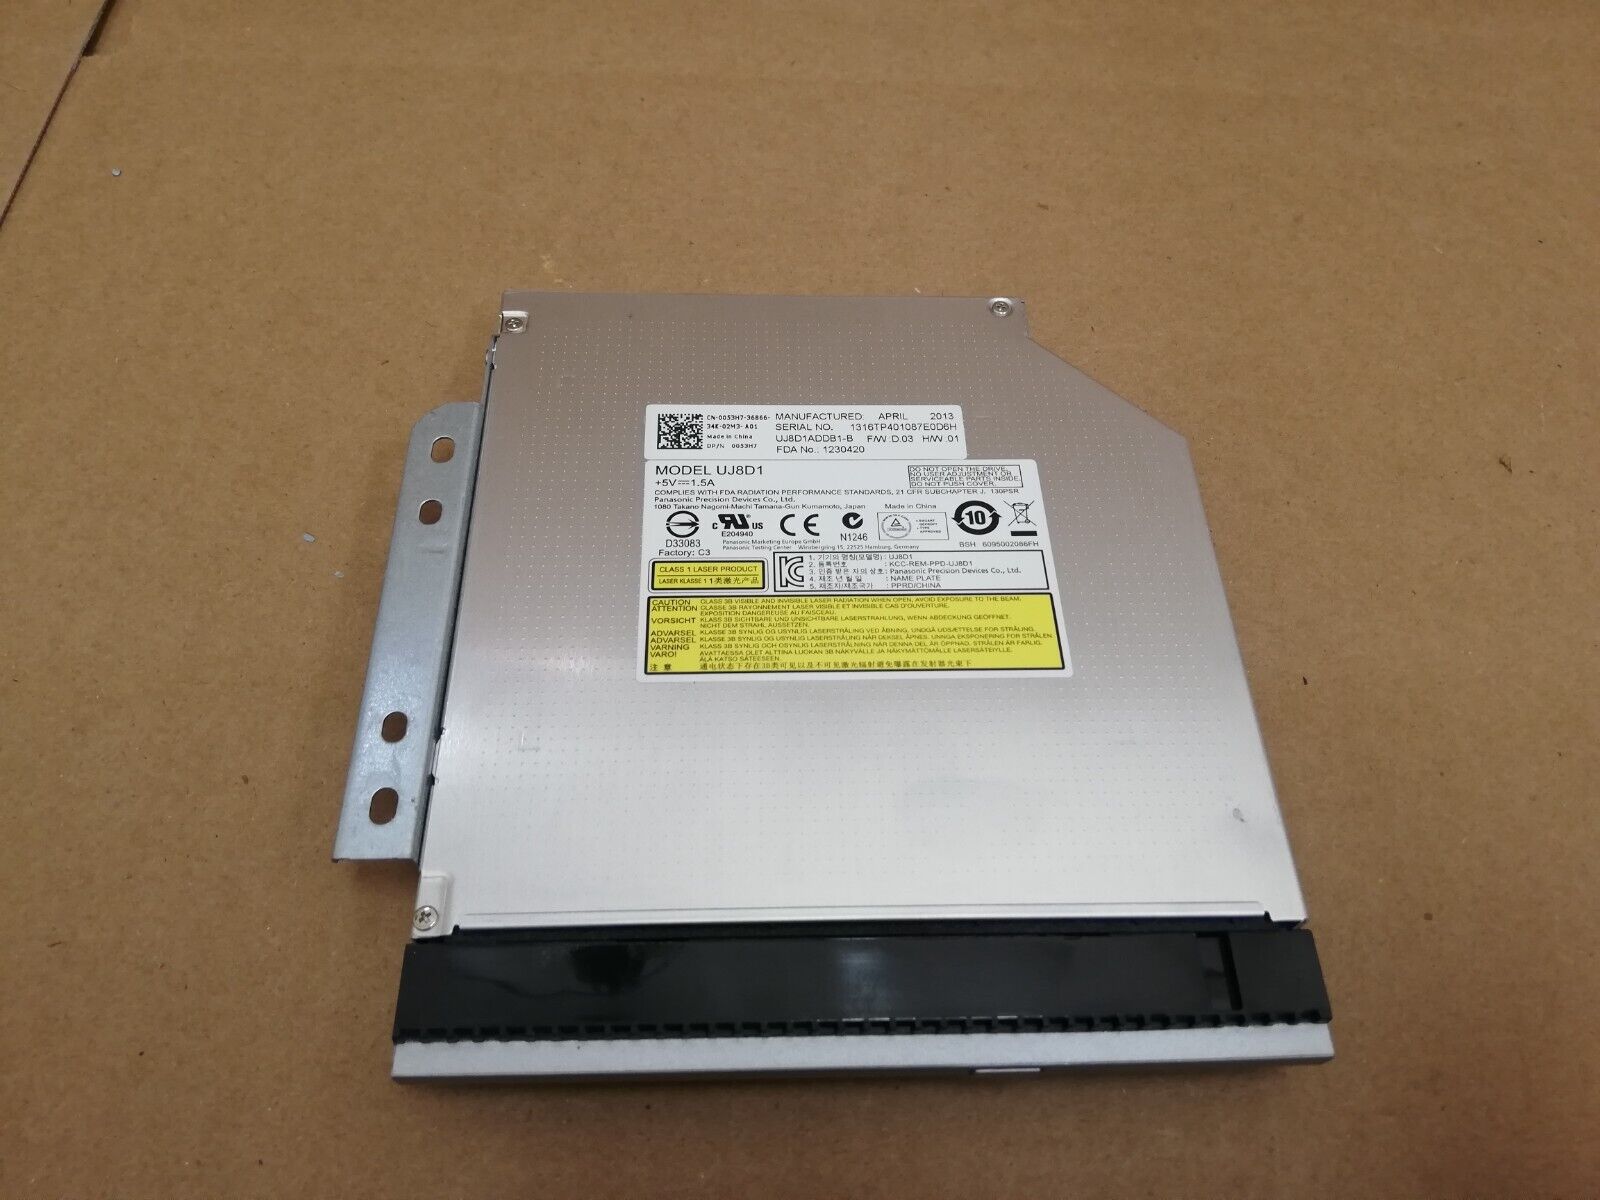 OEM Dell Optiplex 9010 AIO All In One PC DVD-RW Drive Re-writer UJ8D1 053H7